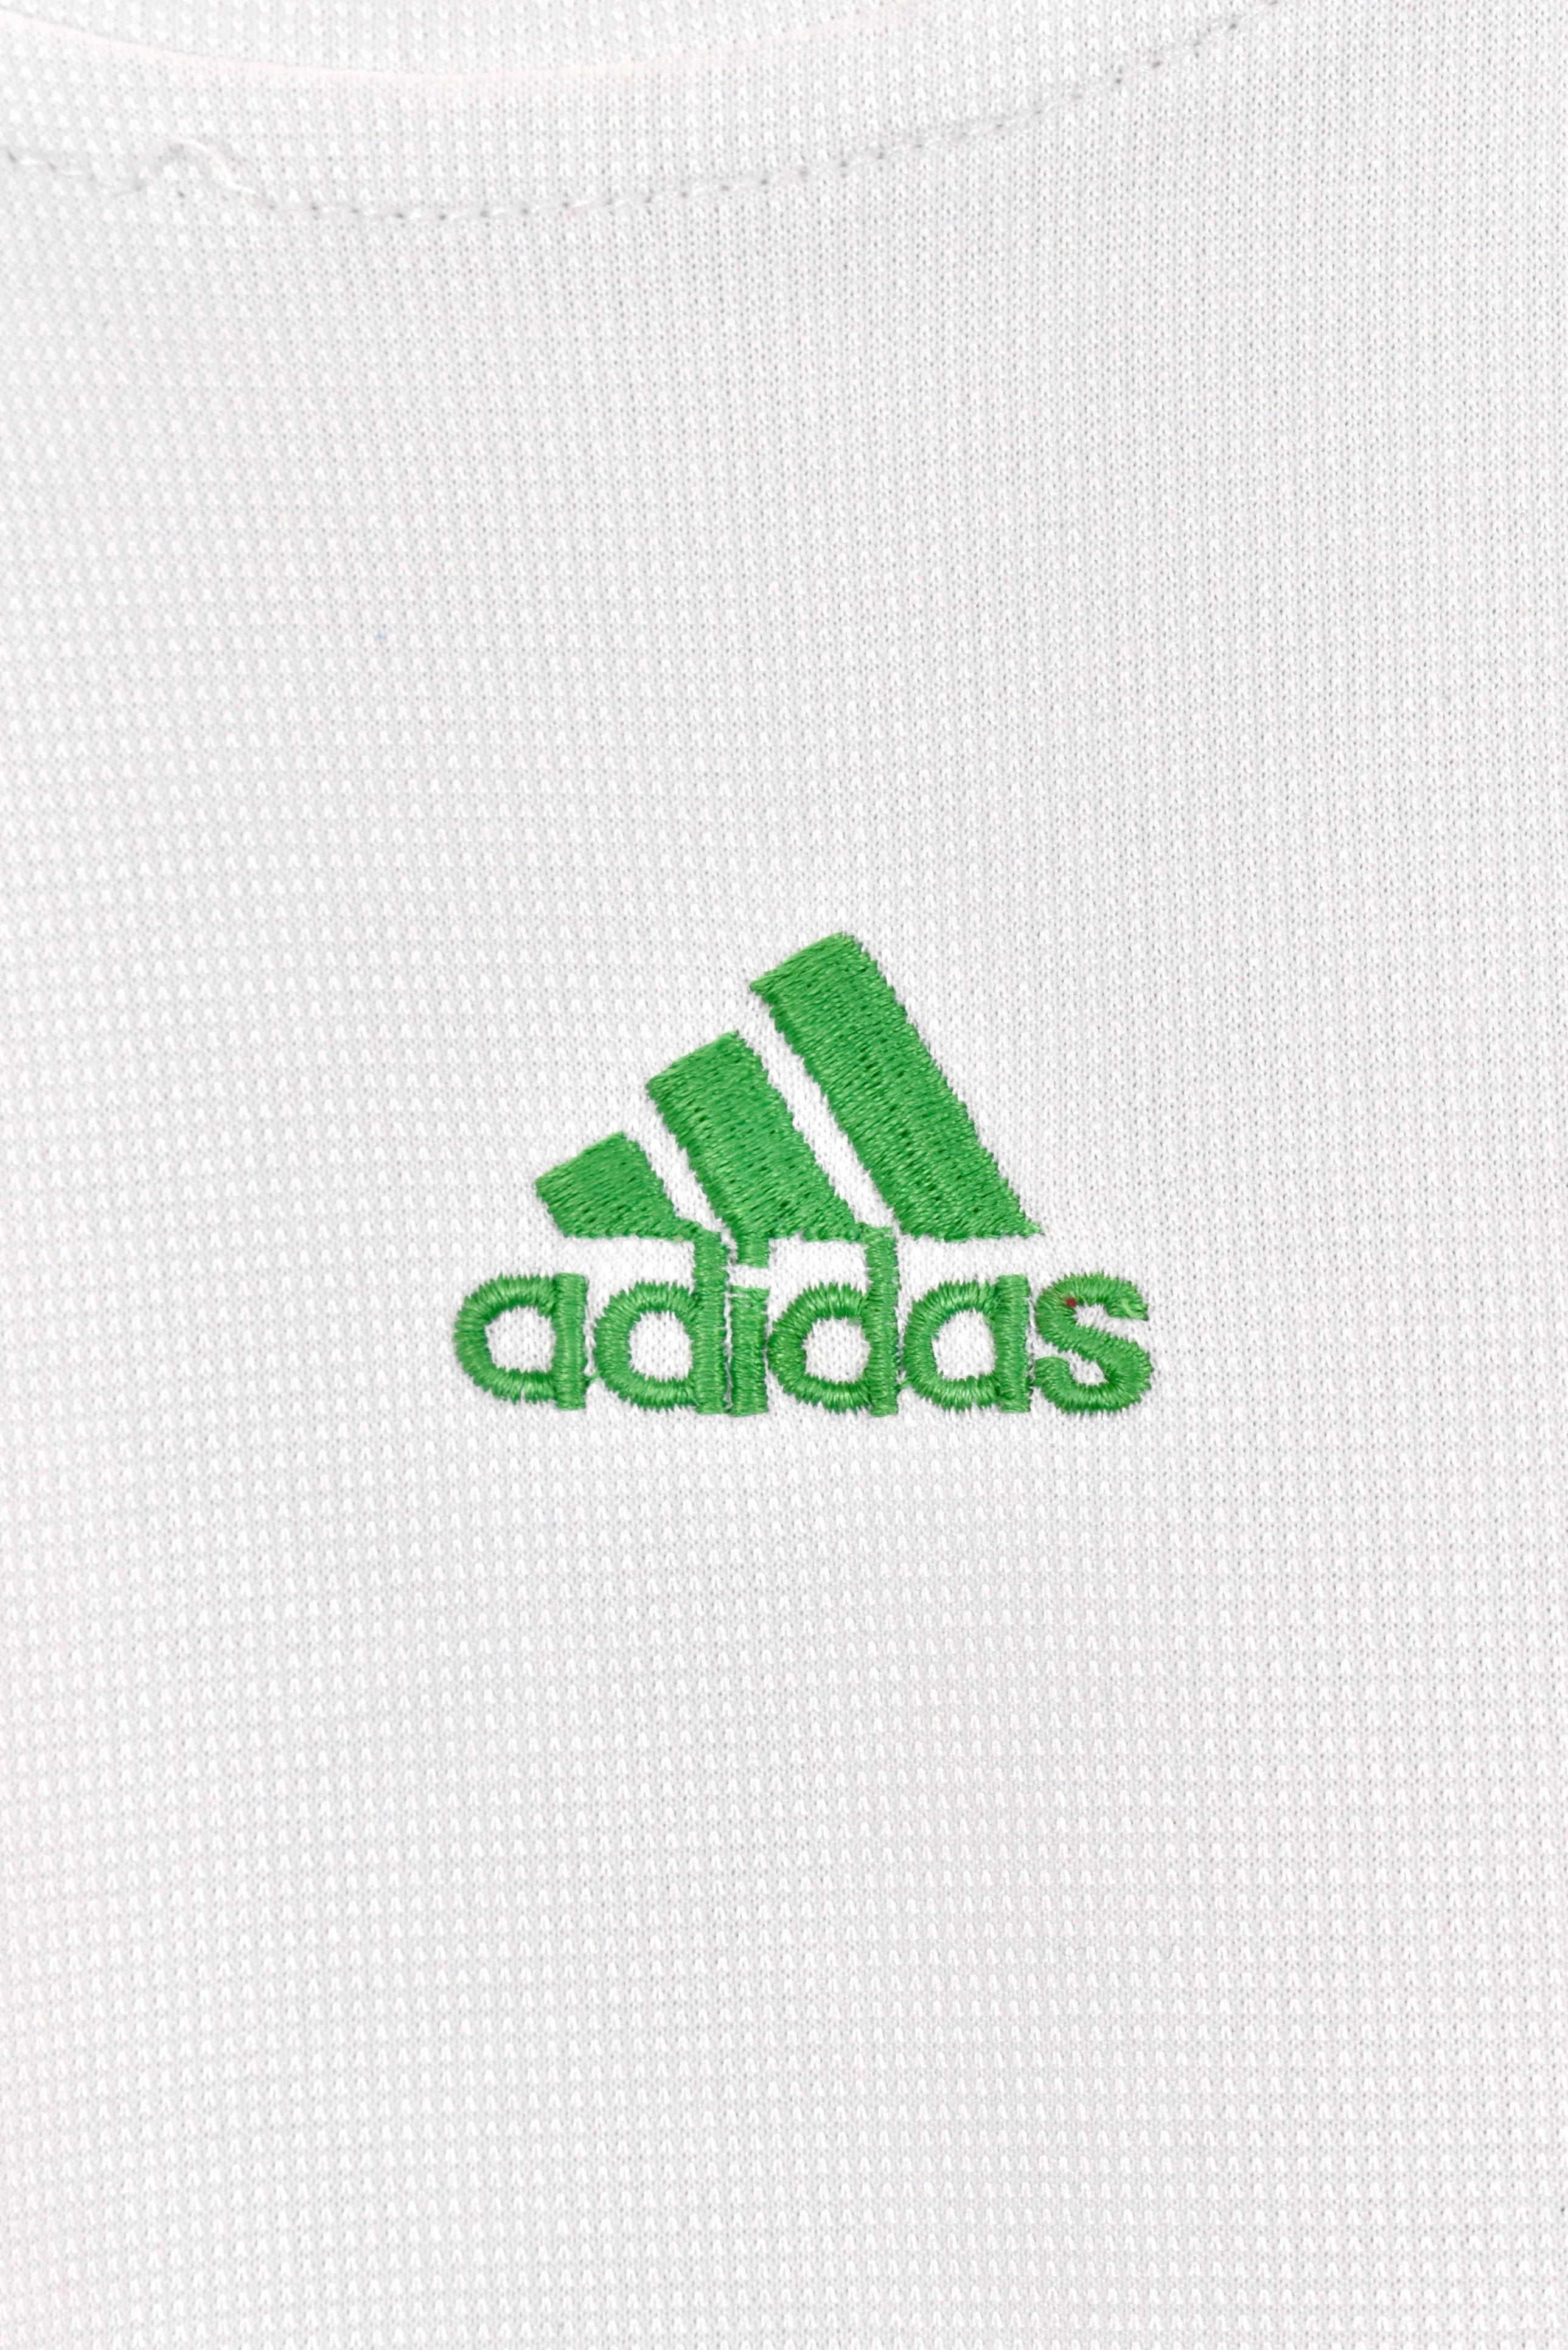 Vintage Adidas shirt, athletic soccer embroidered tee - AU L ADIDAS